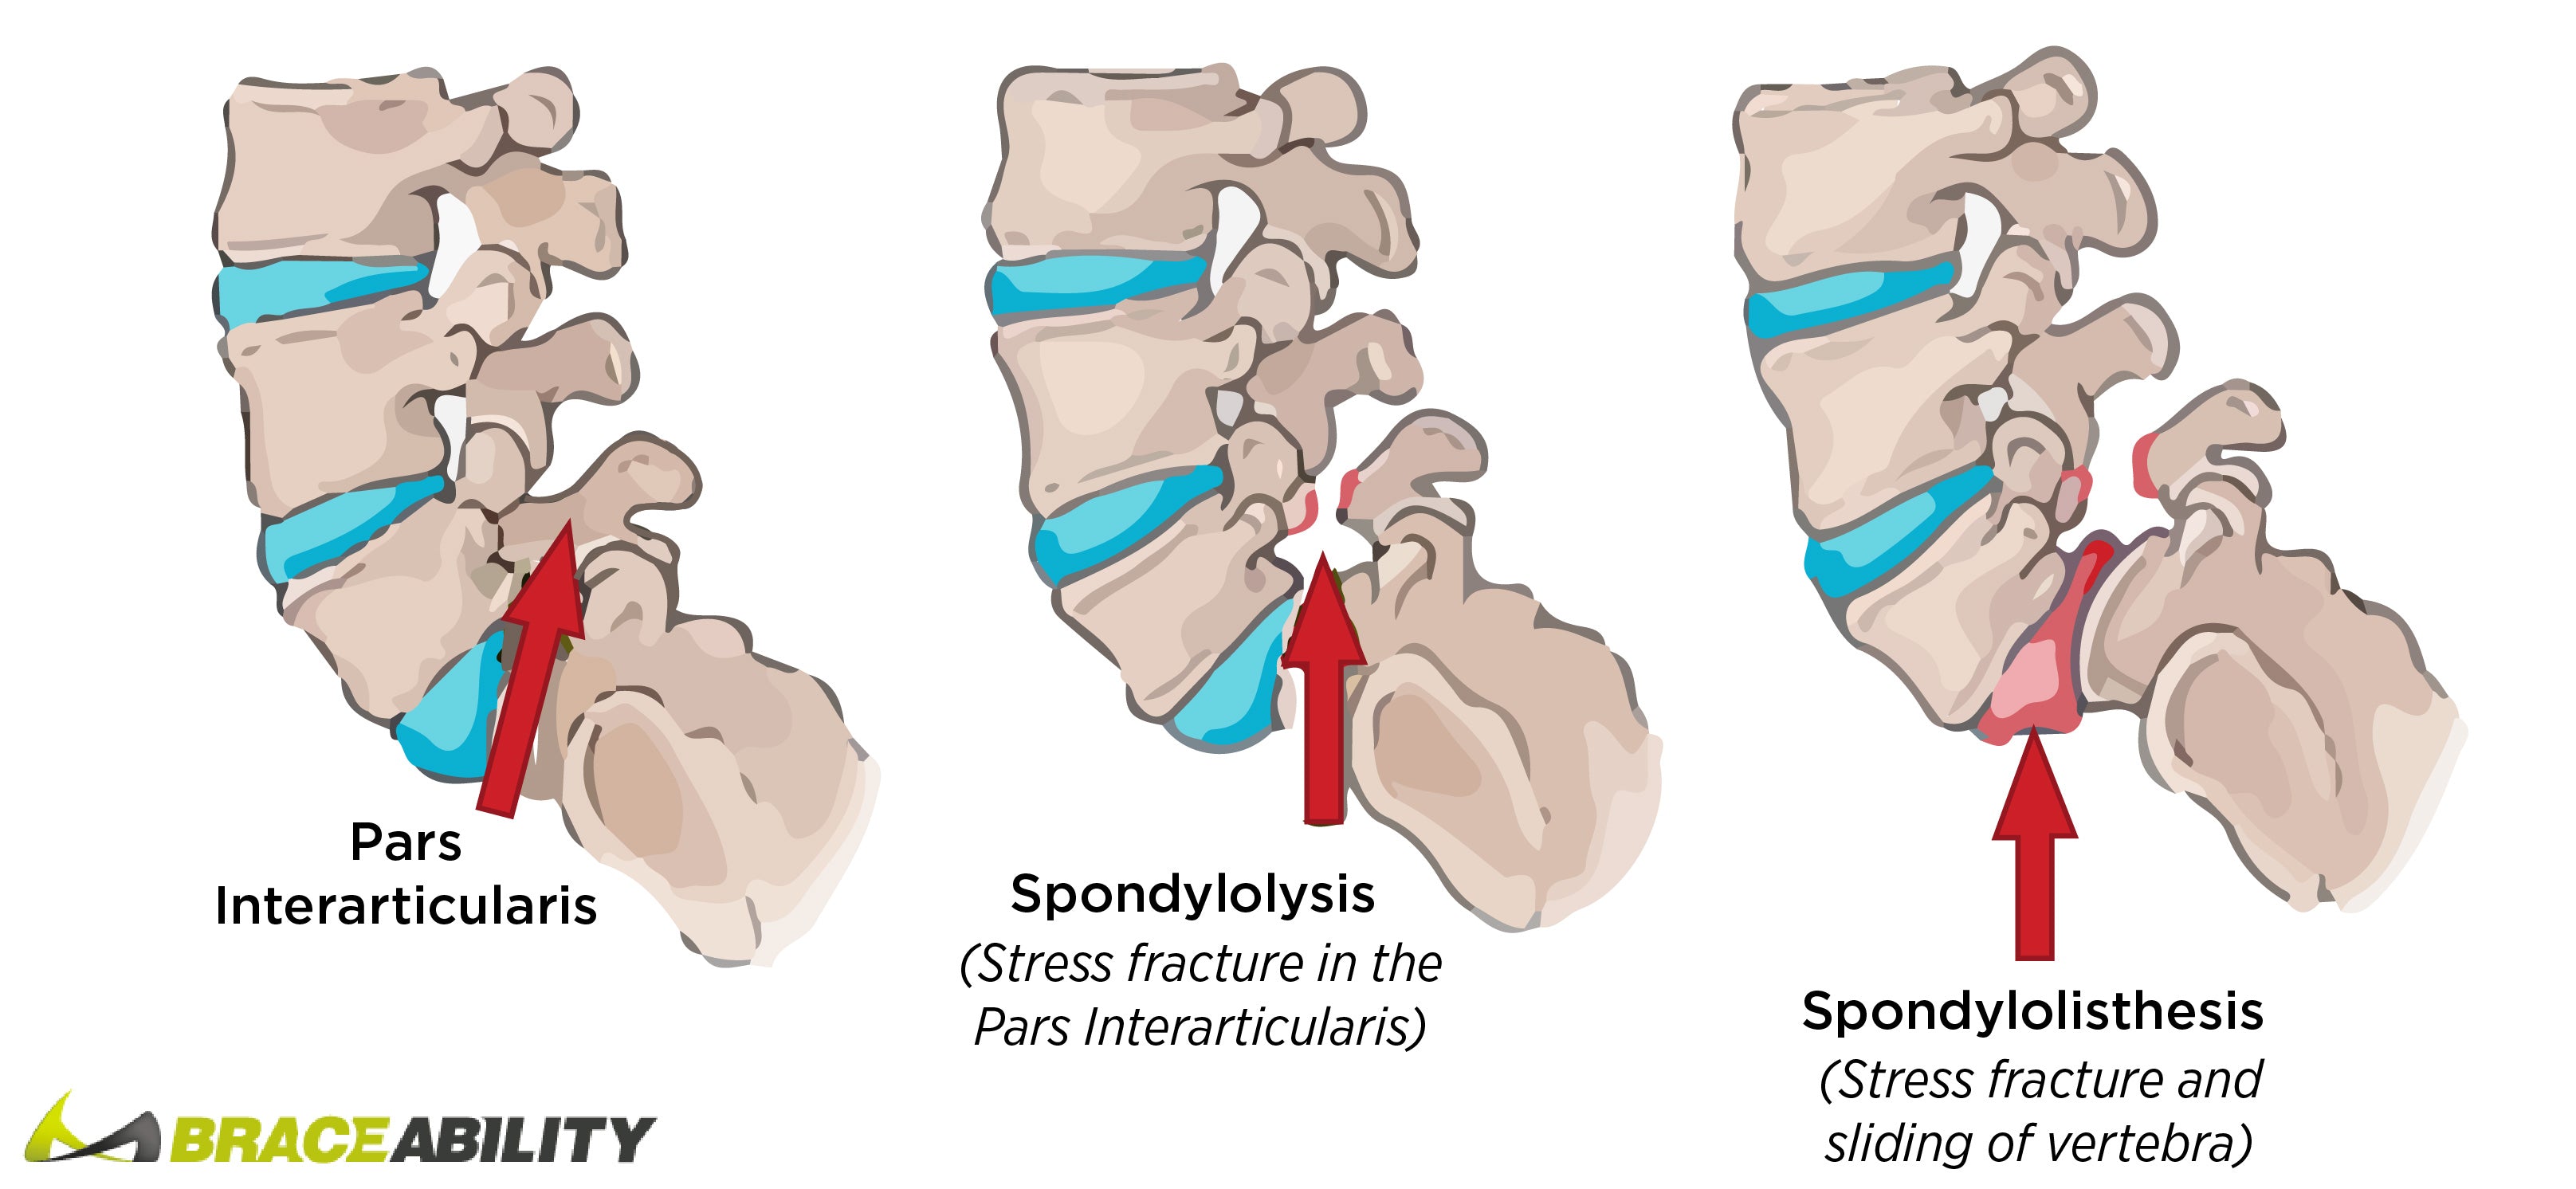 comparison of spondylolysis and spondylolisthesis in the back anatomy